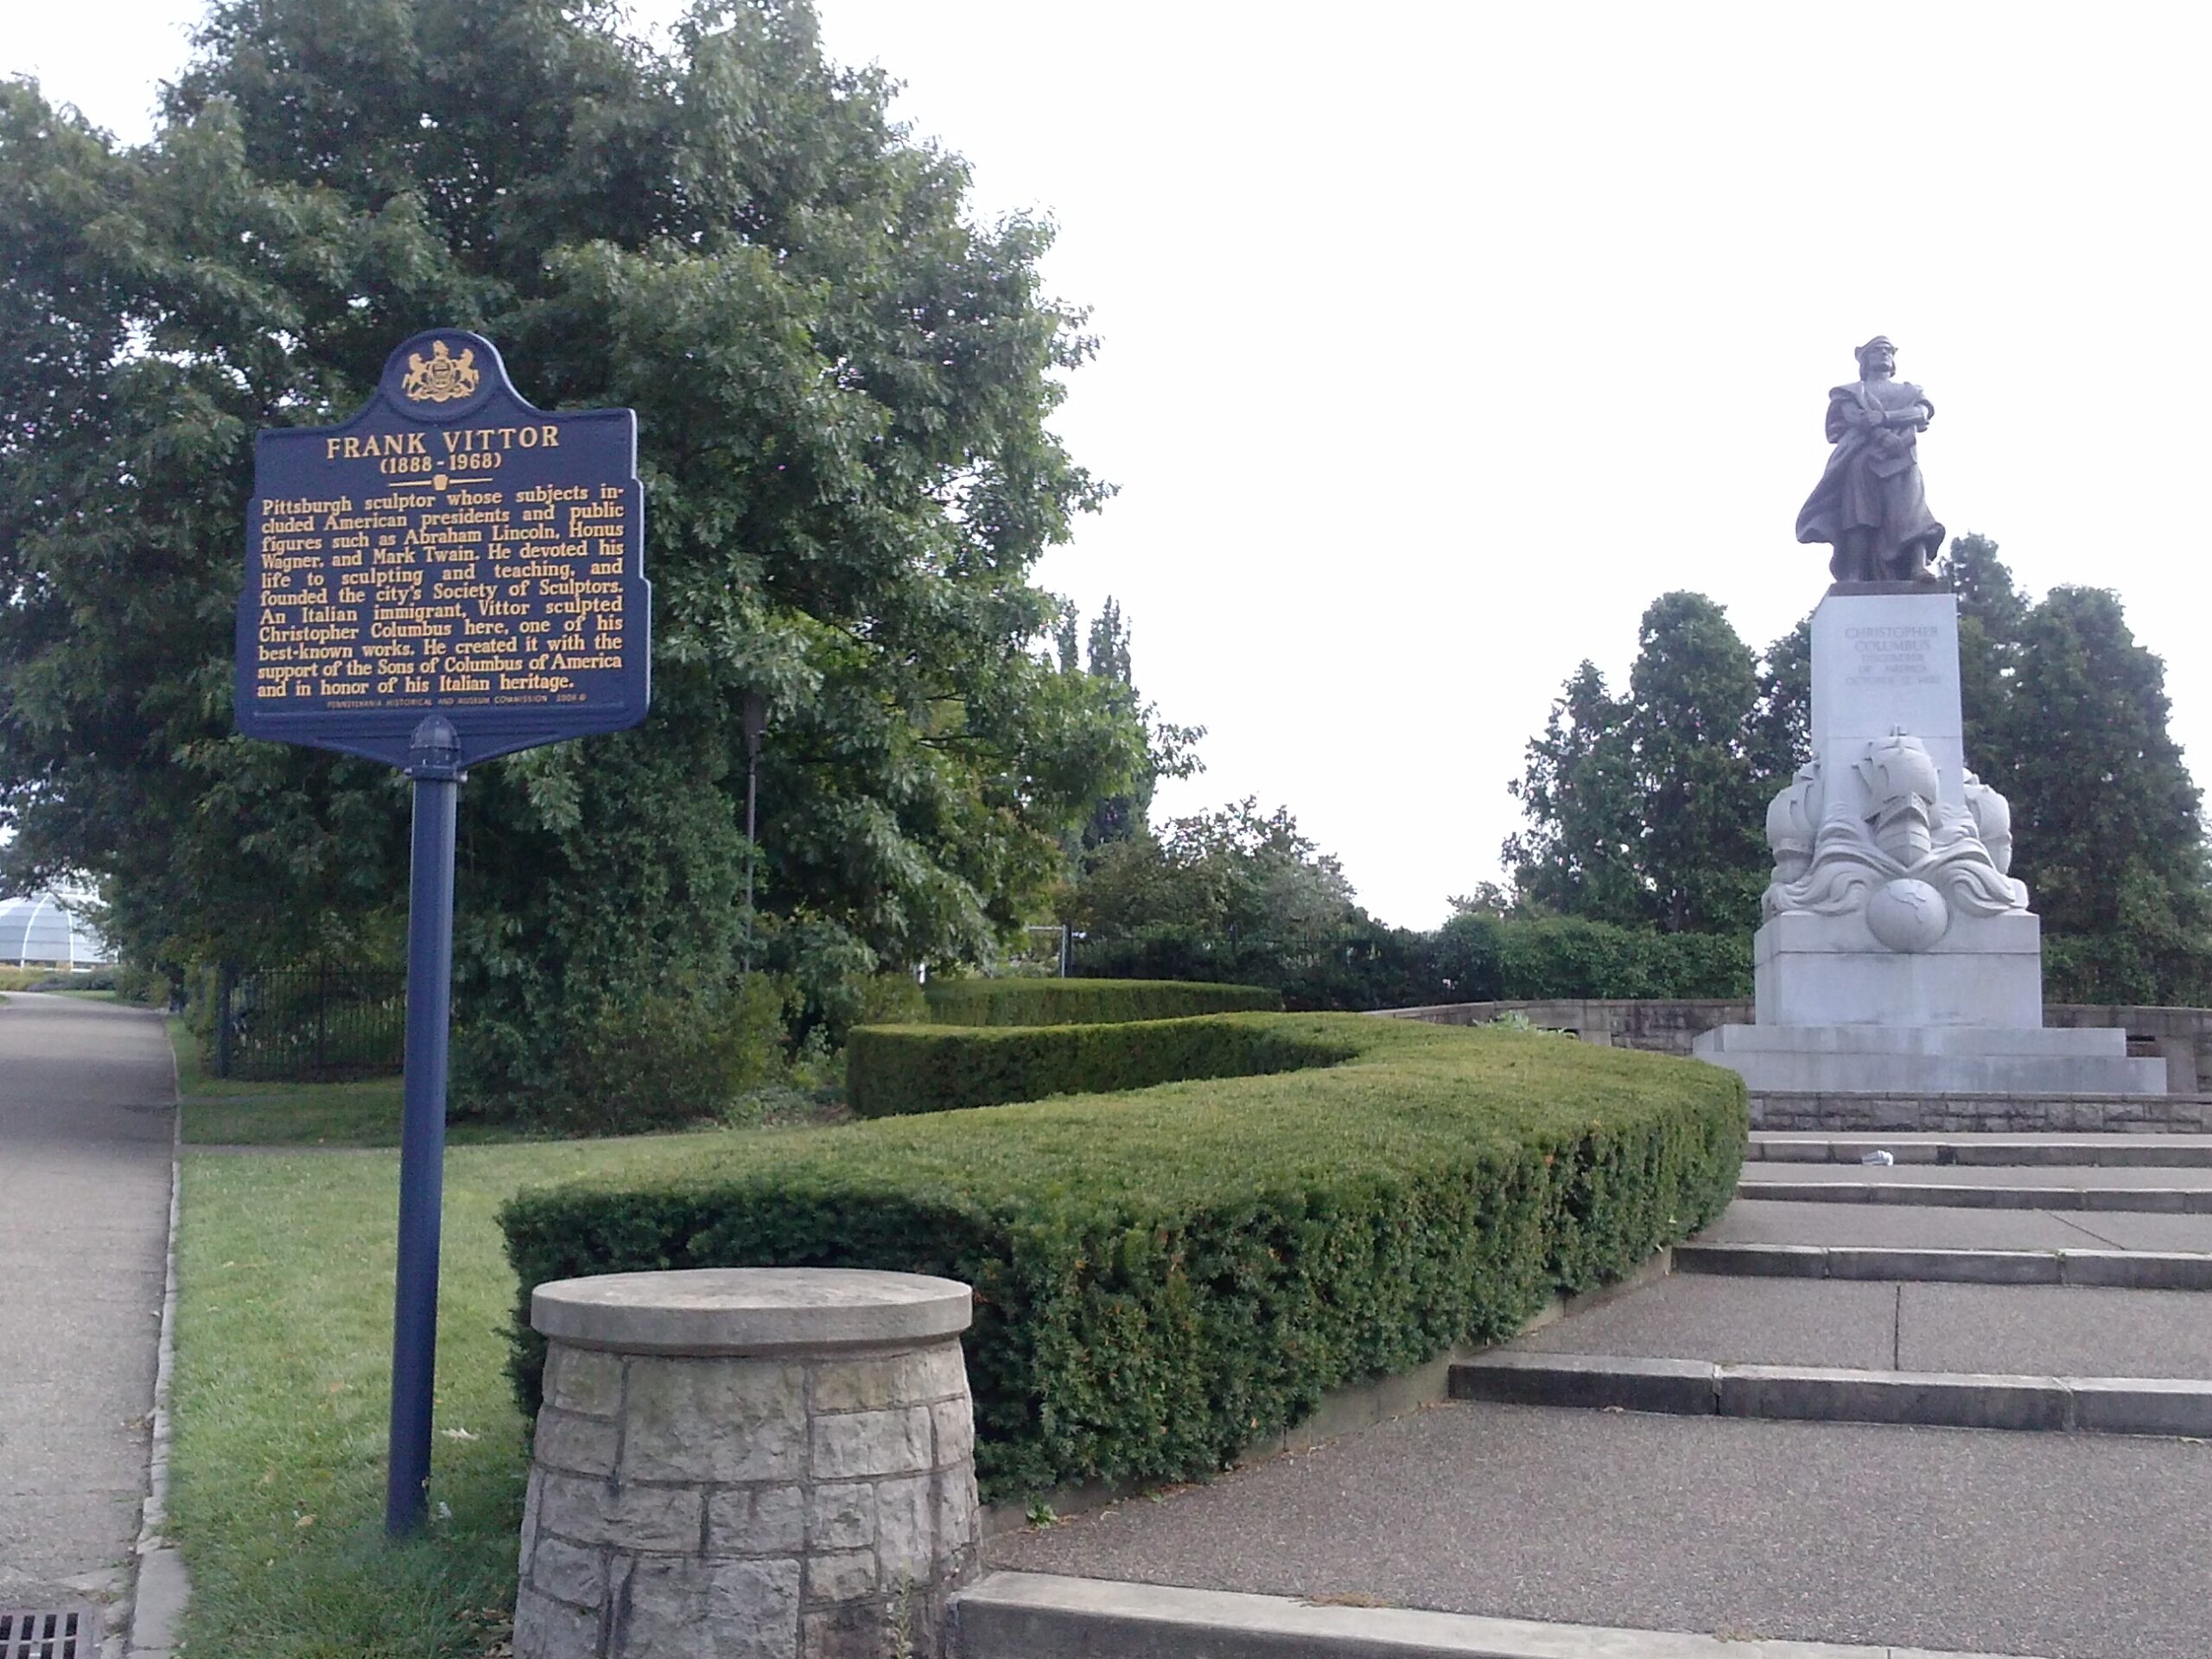 Judge to mediate dispute over Columbus statue in Pittsburgh